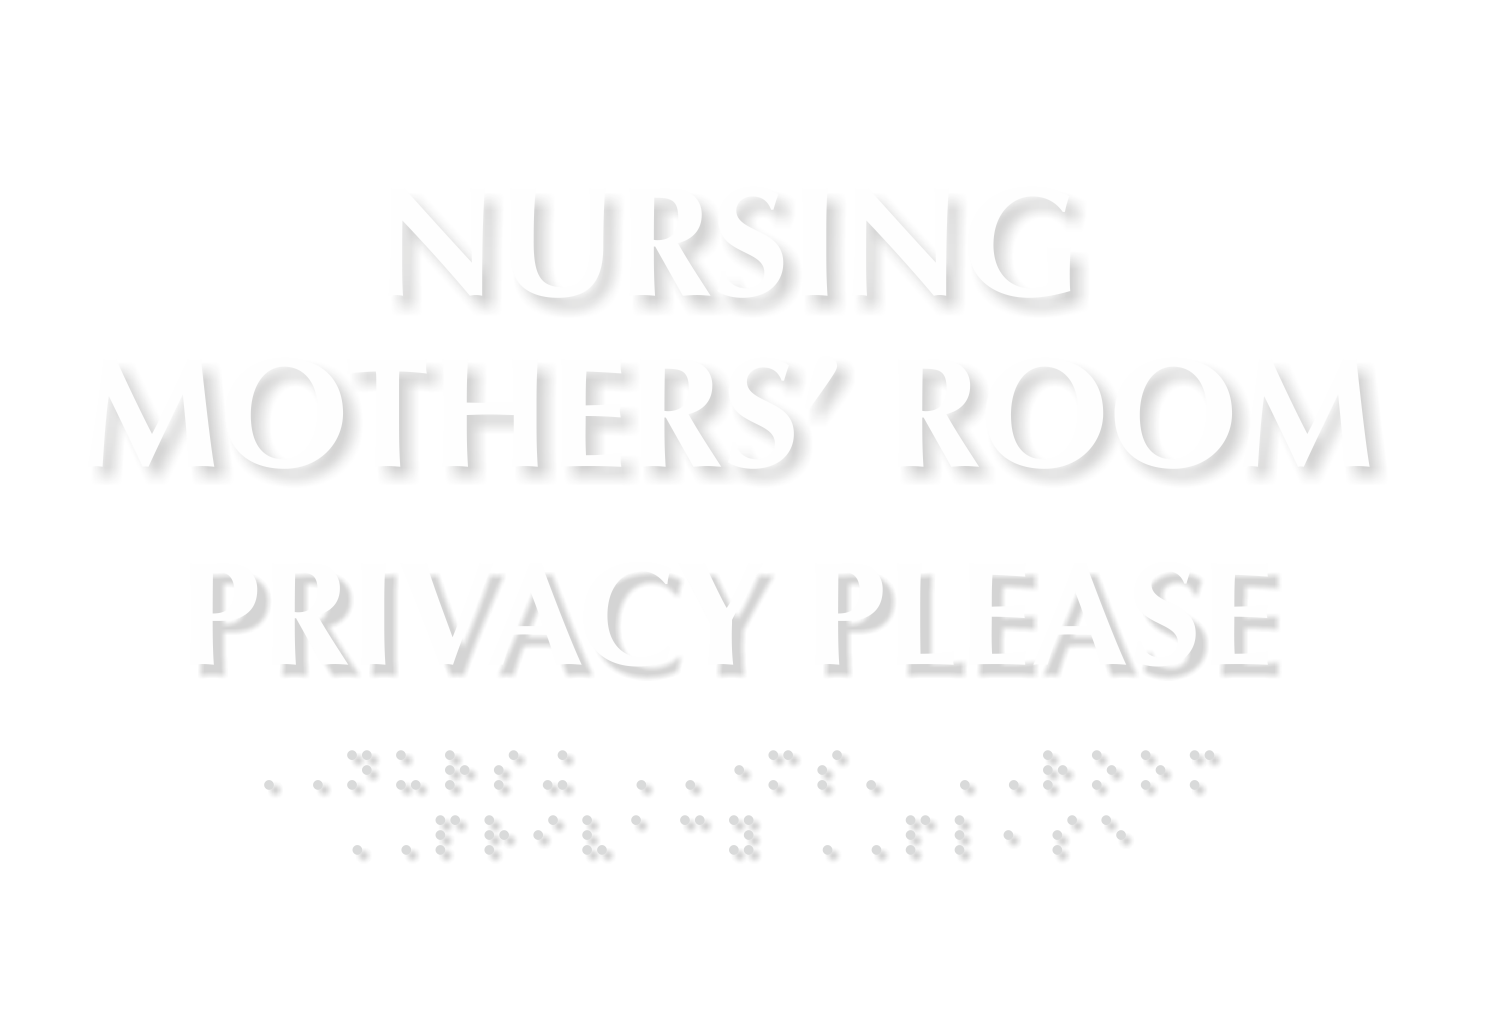 Nursing Mothers Room Privacy Please Braille Restroom Sign